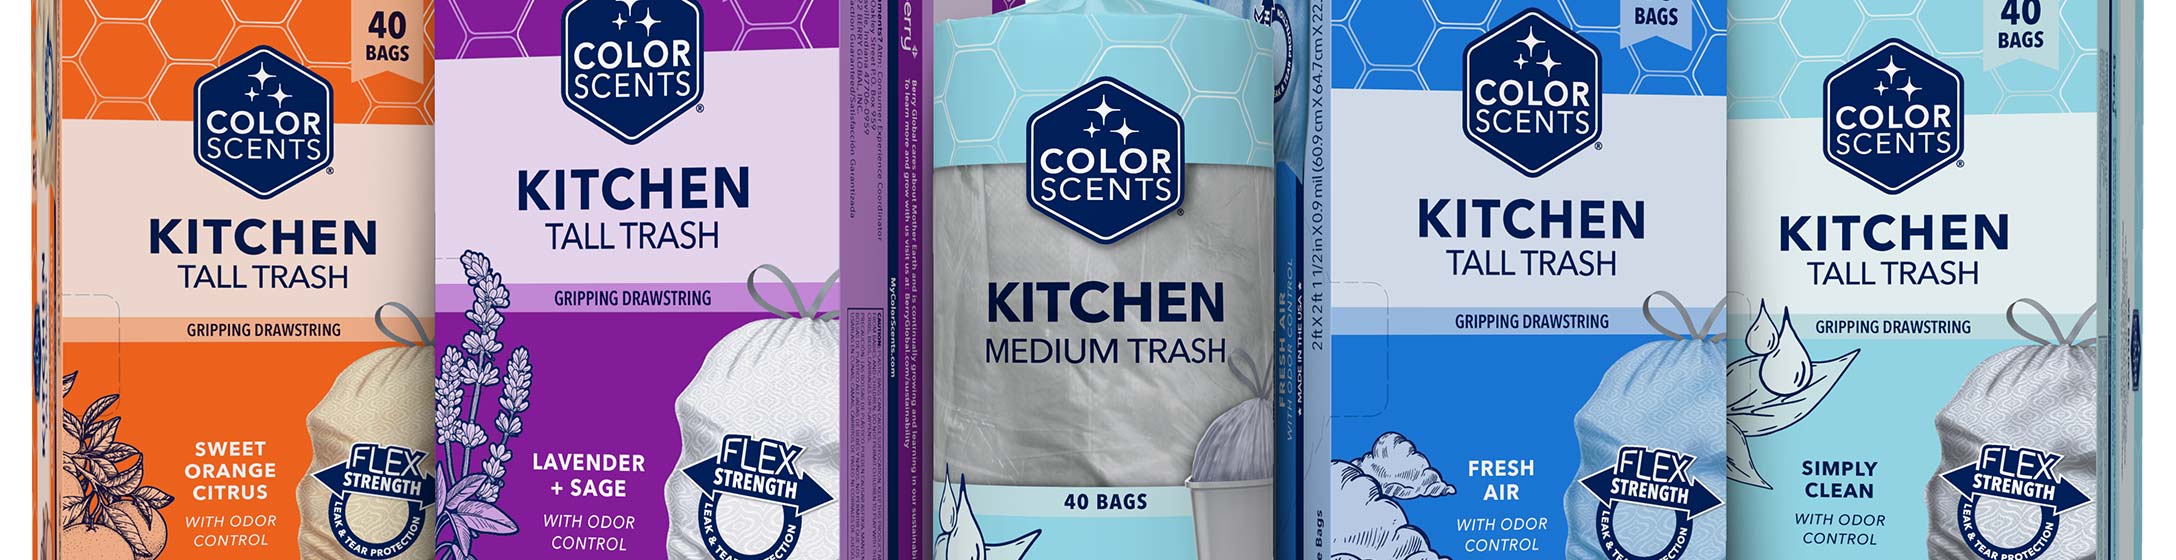 Color Scents Medium Trash Bags, 8 Gallon, 40 Bags (Vanilla Flower